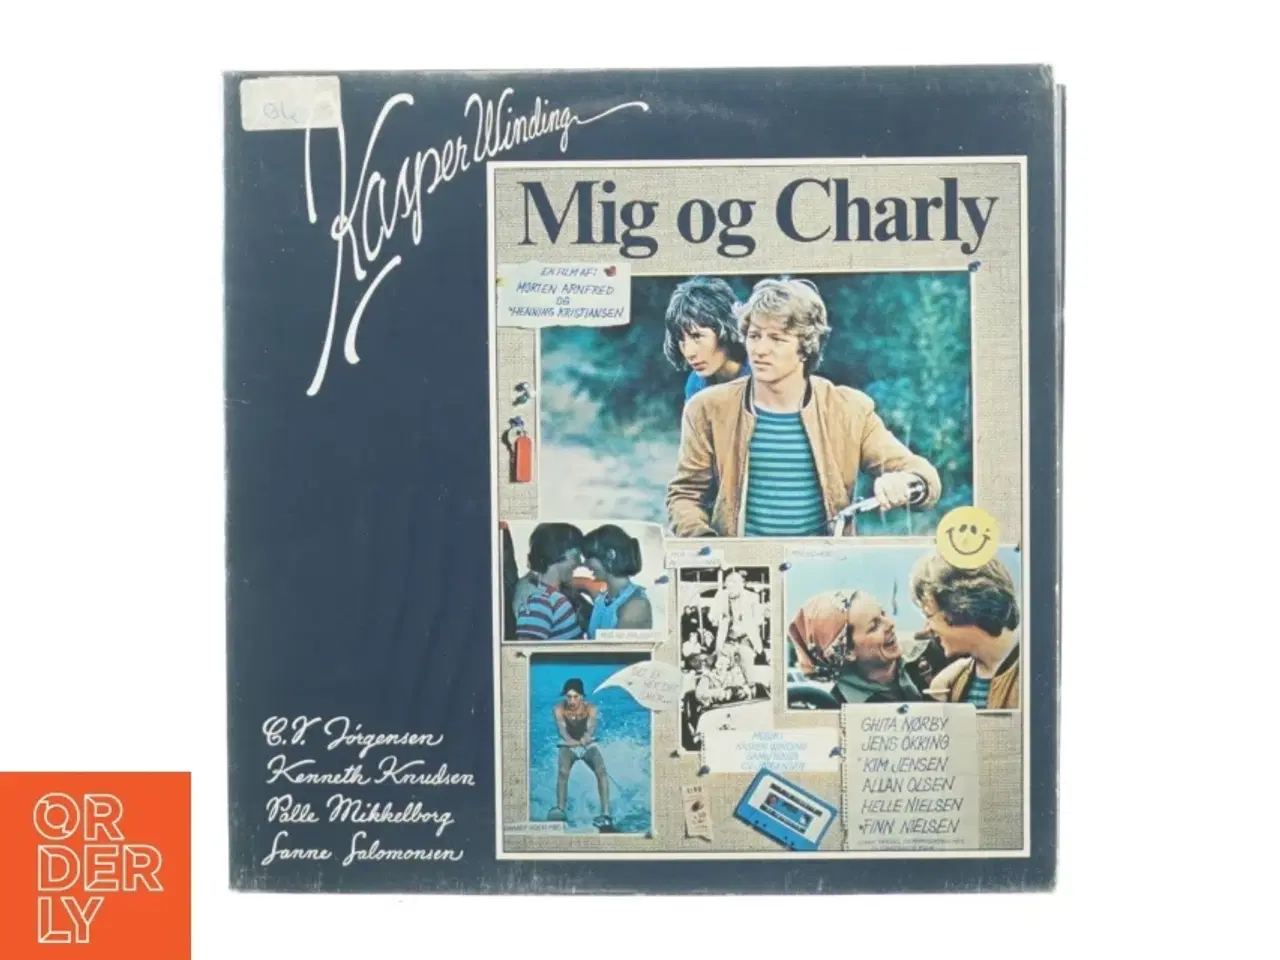 Billede 1 - Kasper winding: Mig og charly (LP) fra Metronome (str. 30 cm)